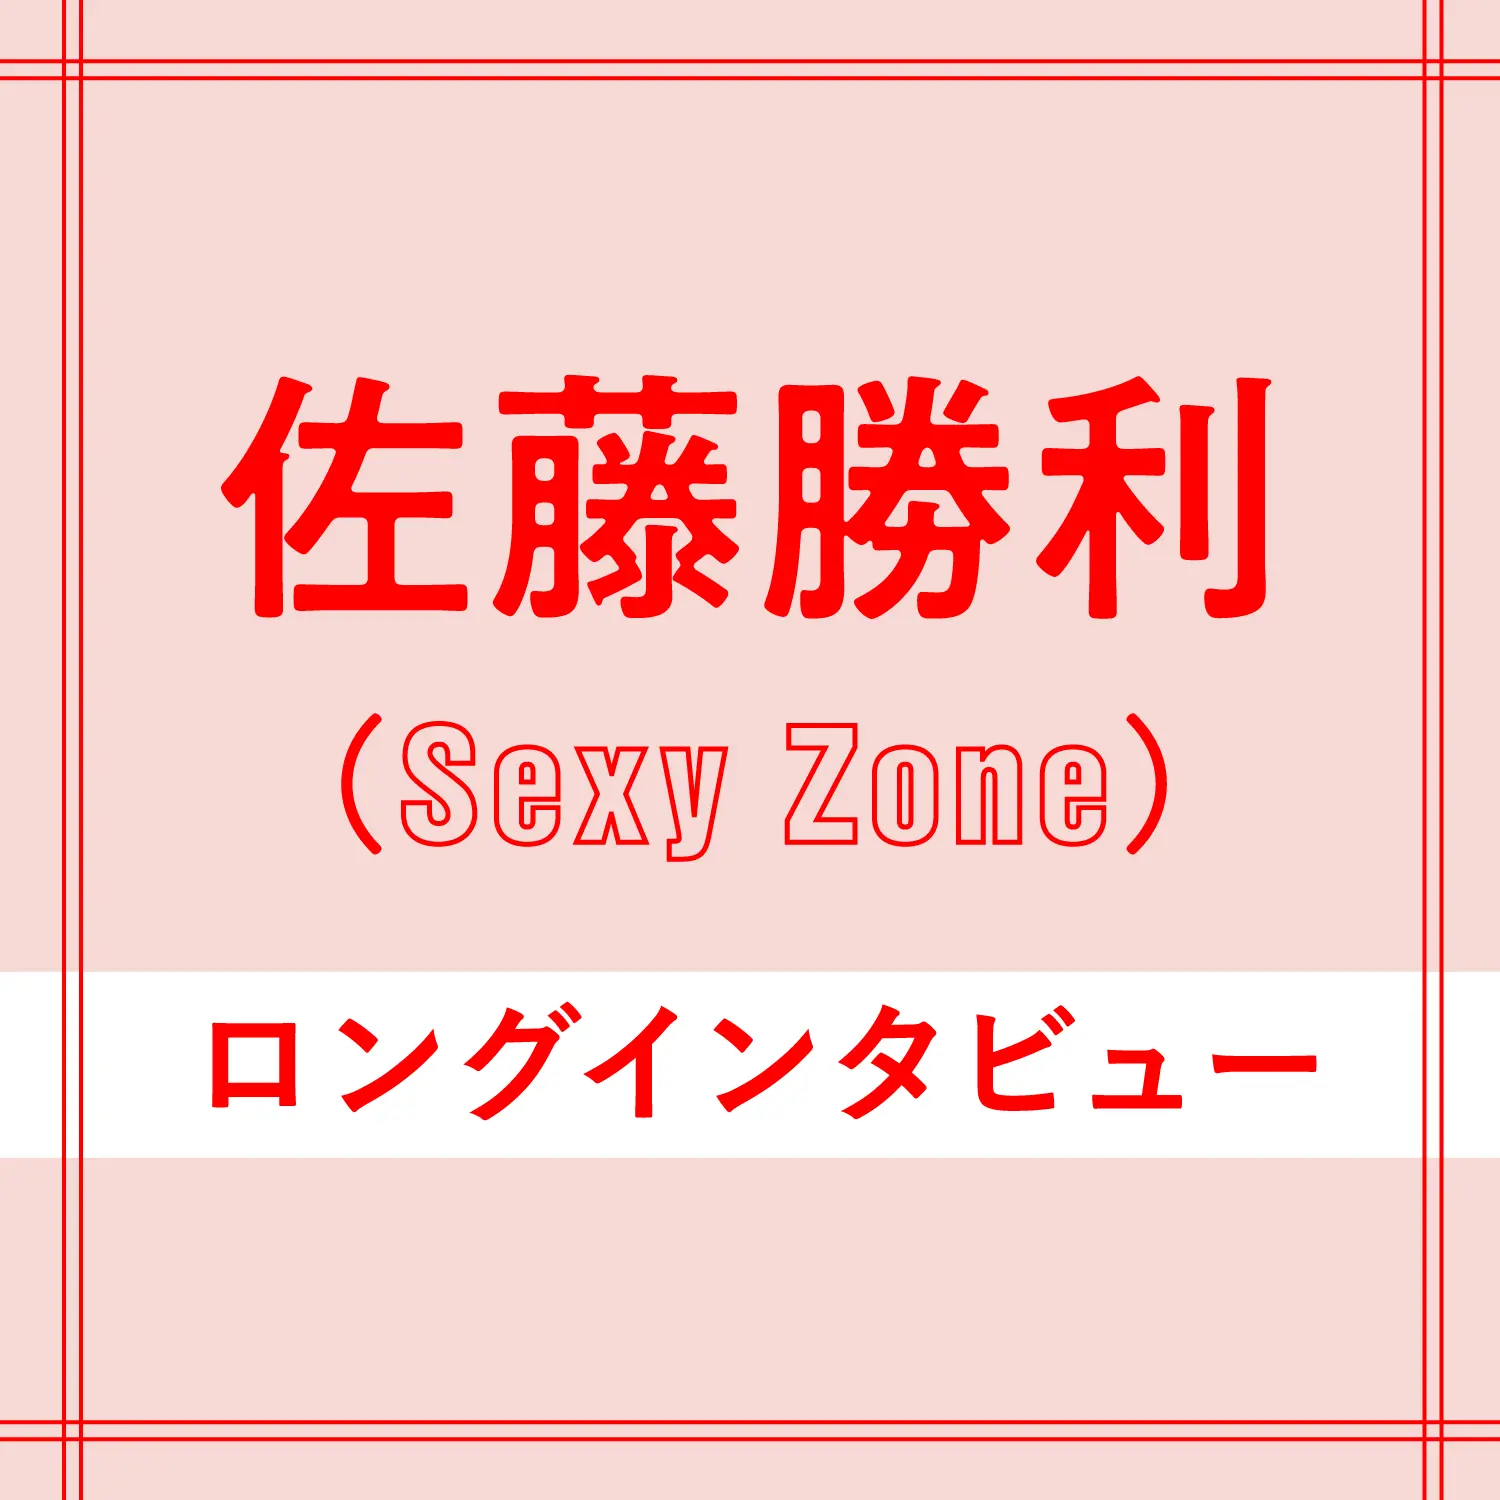 Sexy Zone佐藤勝利 原動力は メンバー5人で見る未来 エンタメ Daily More